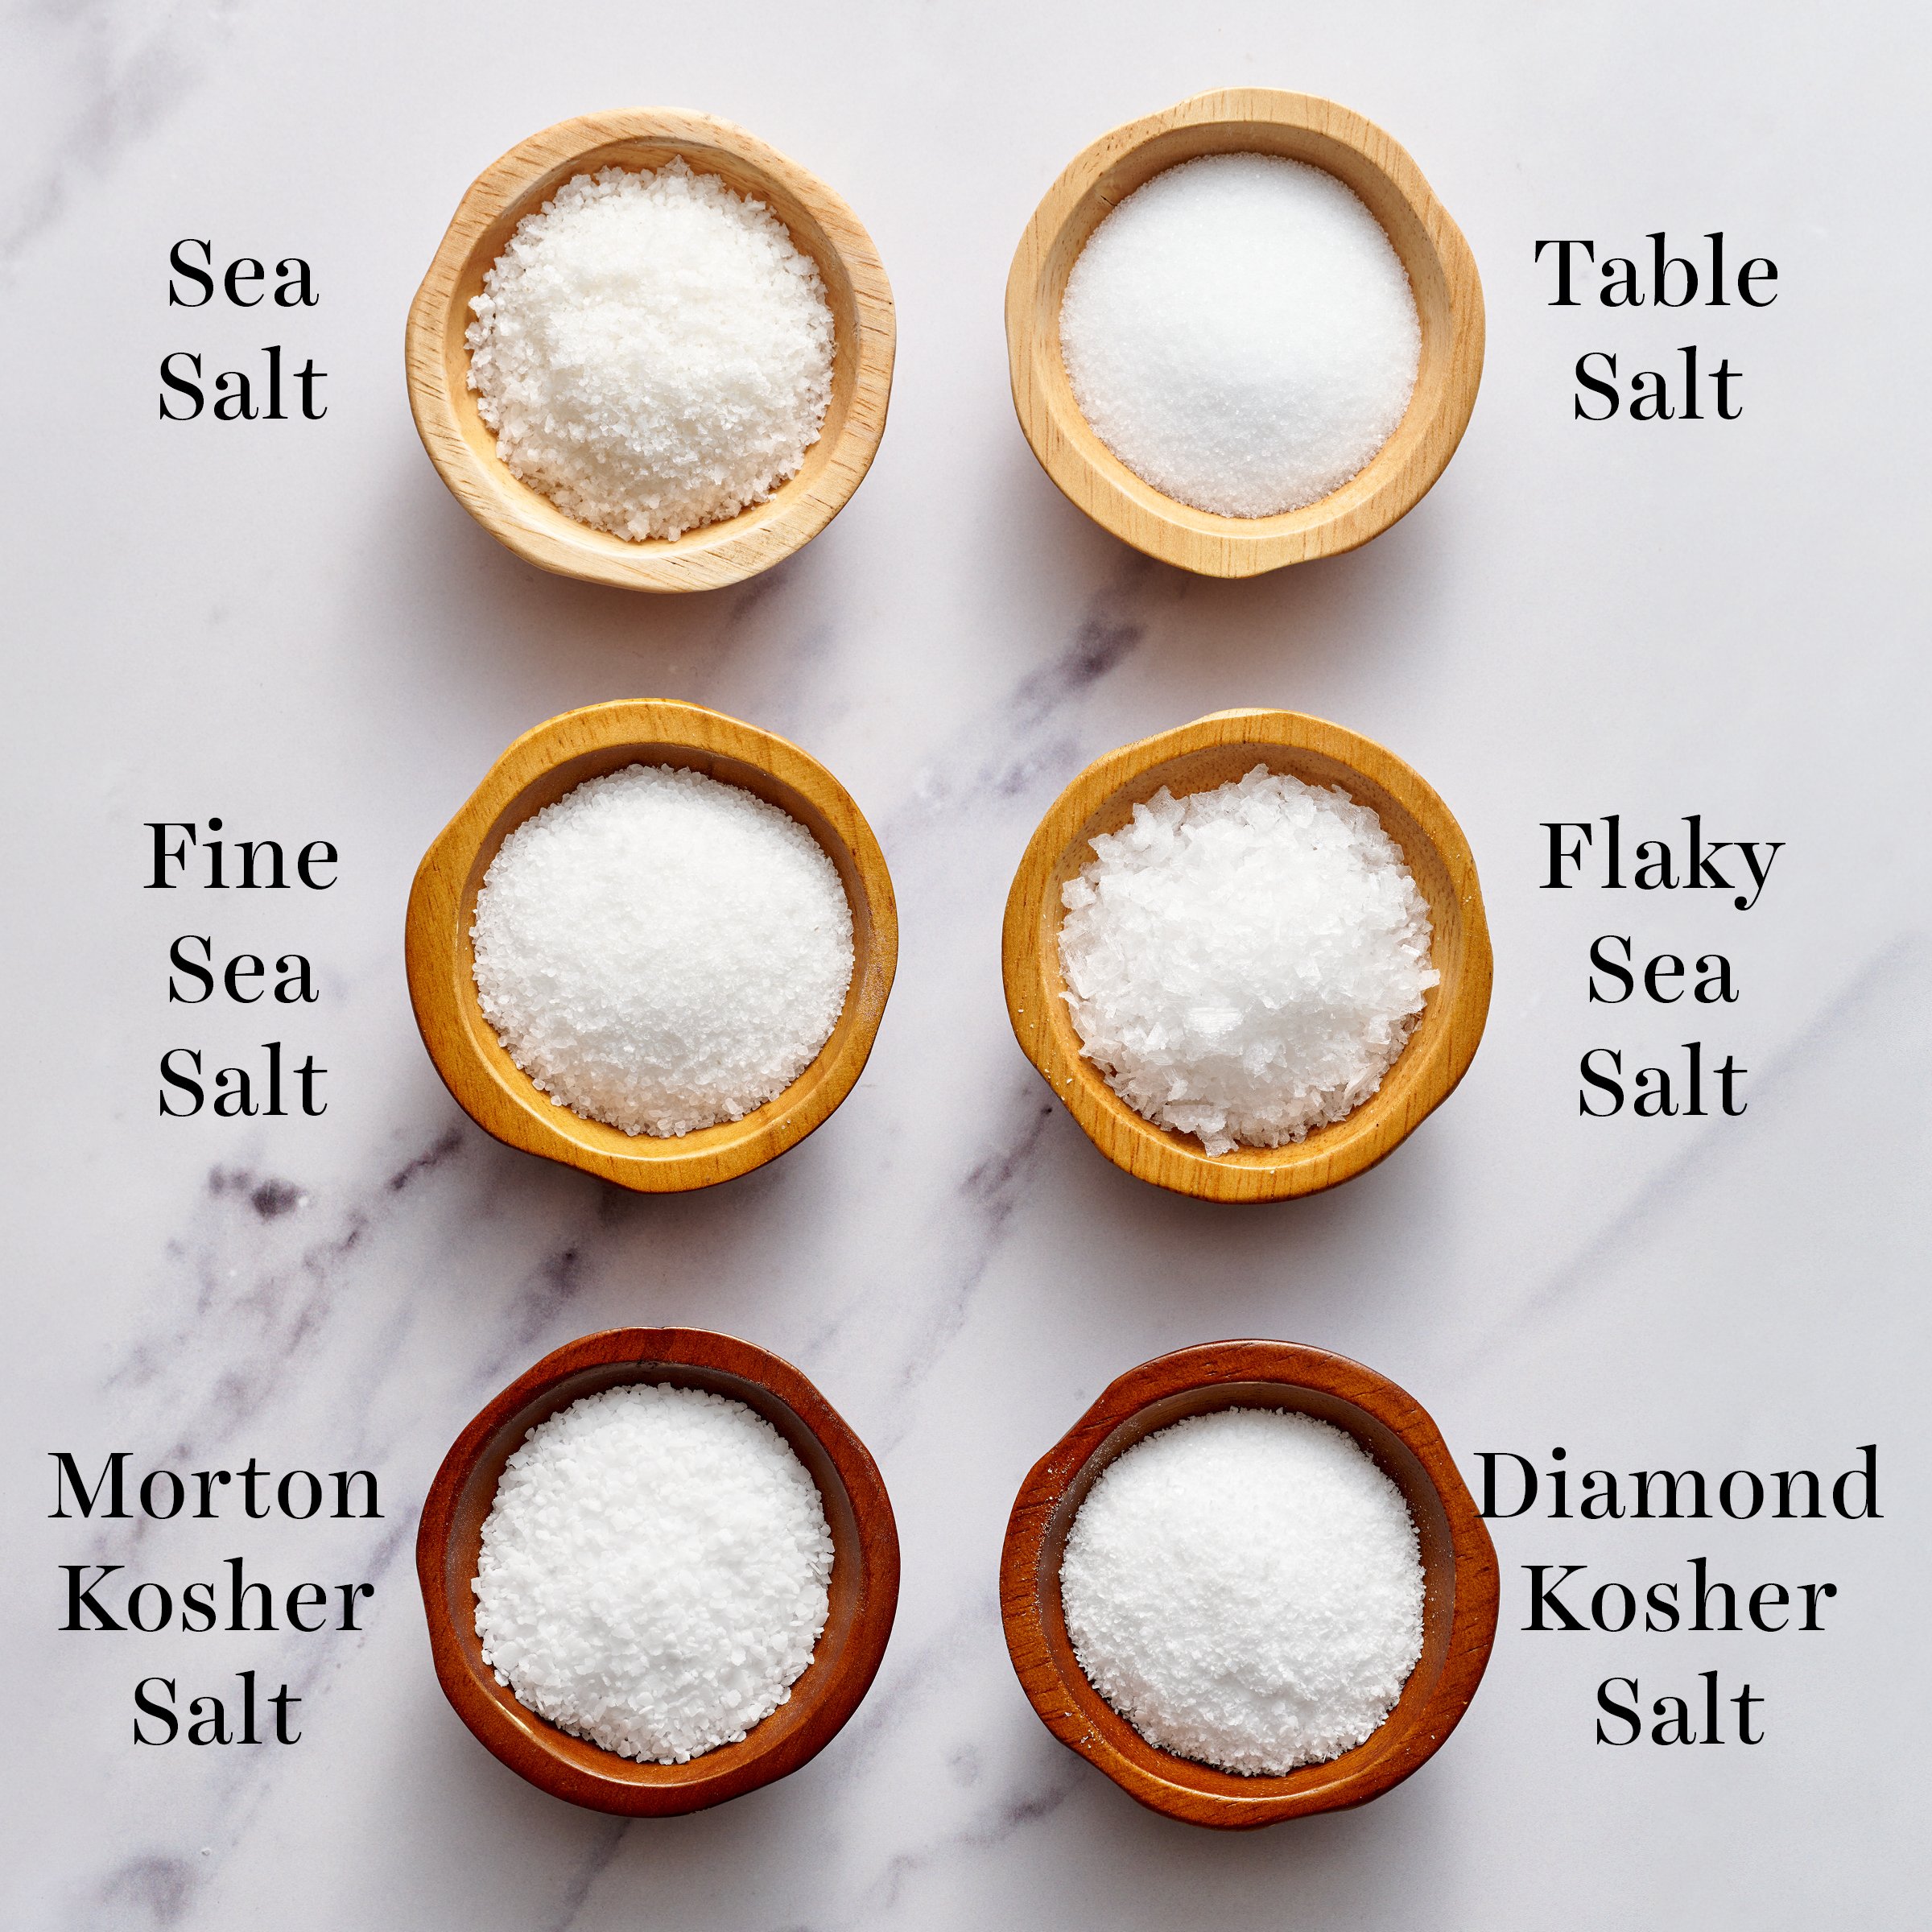 https://handletheheat.com/wp-content/uploads/2022/08/table-salt-vs-sea-salt-vs-kosher-salt.jpg